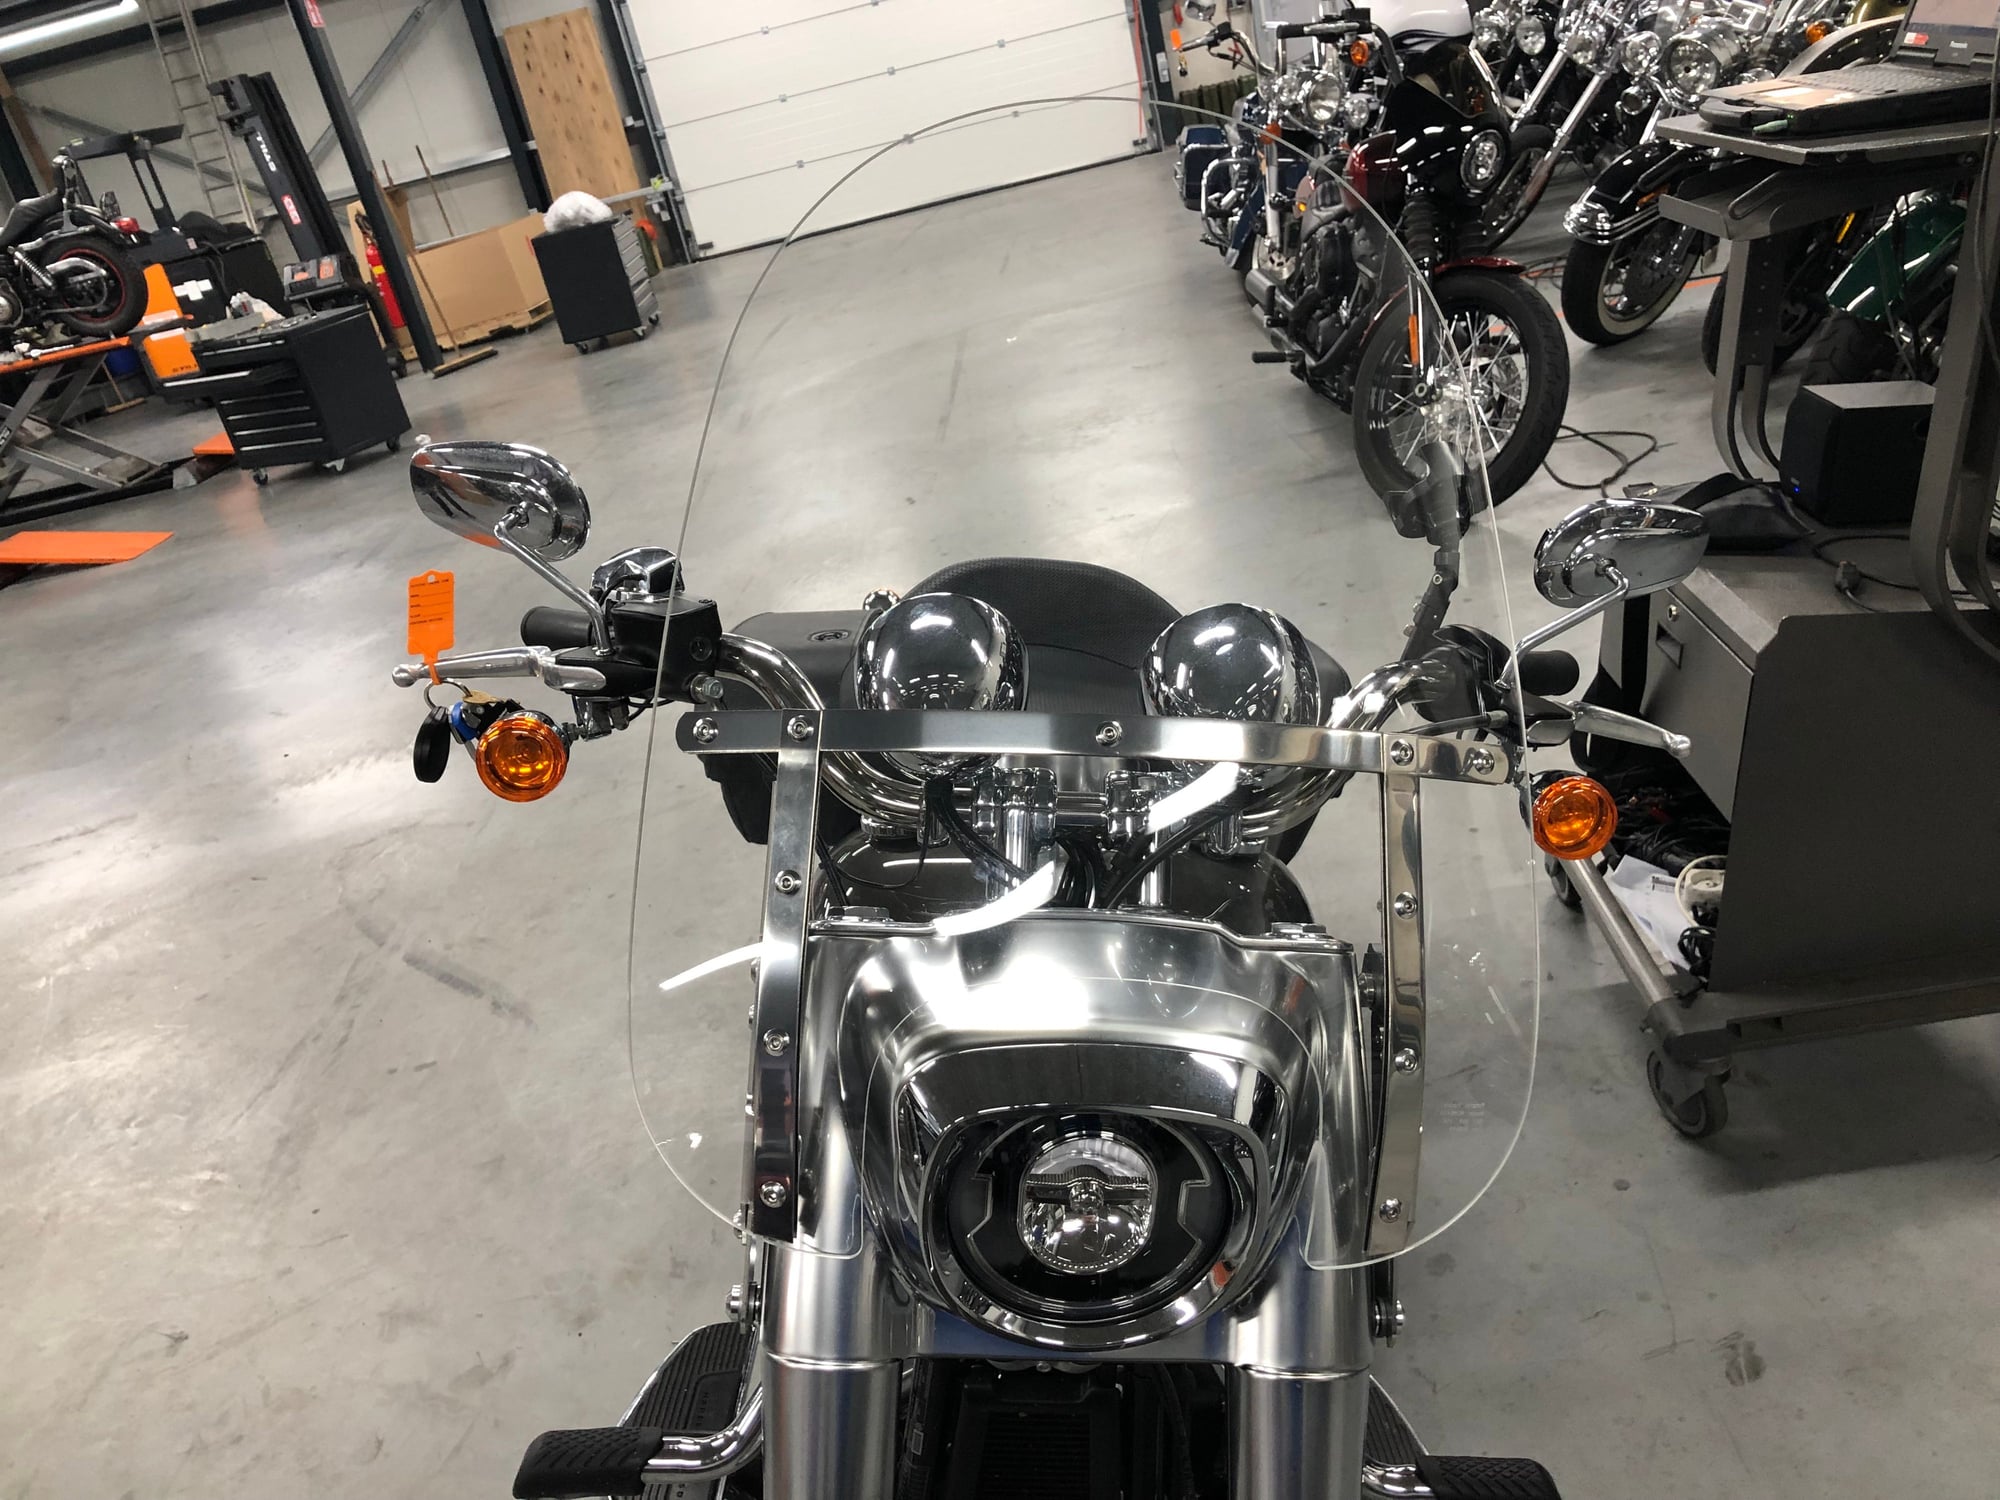 new seat on 2018 fat boy - Harley Davidson Forums